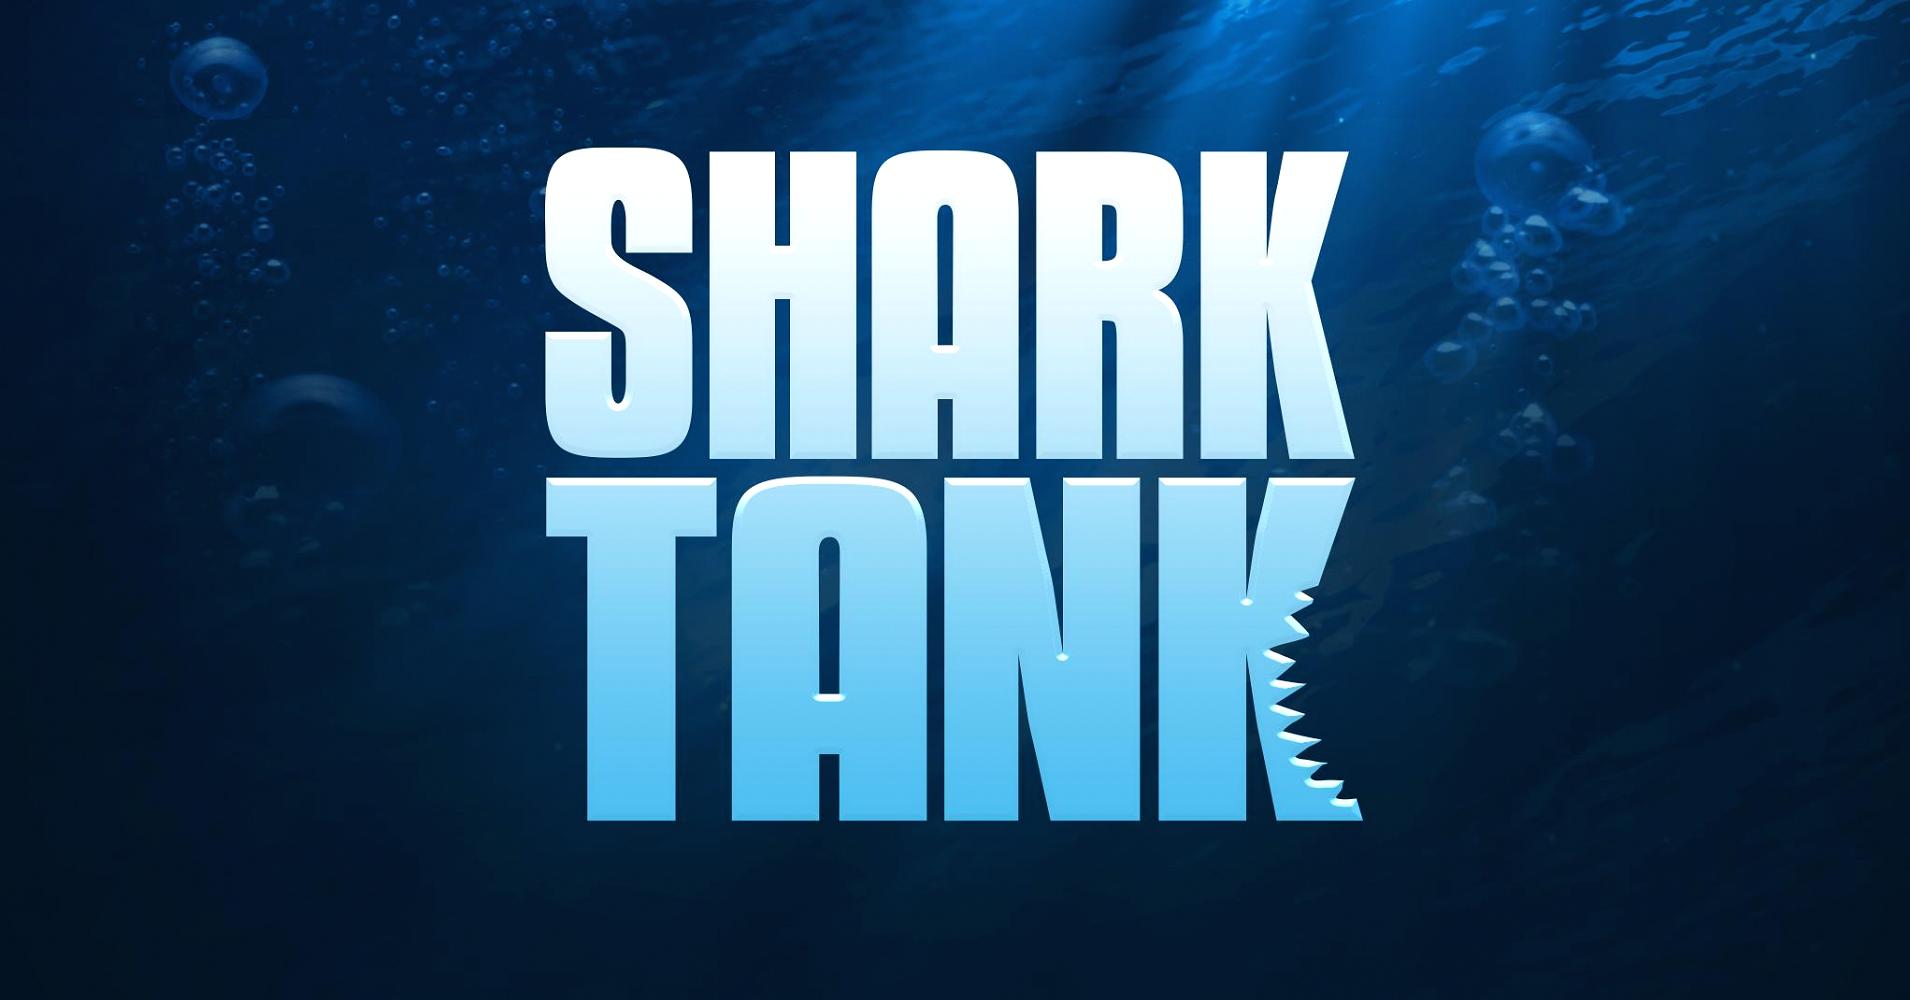 Shark Tank (TV Series 2009– ) - Episode list - IMDb